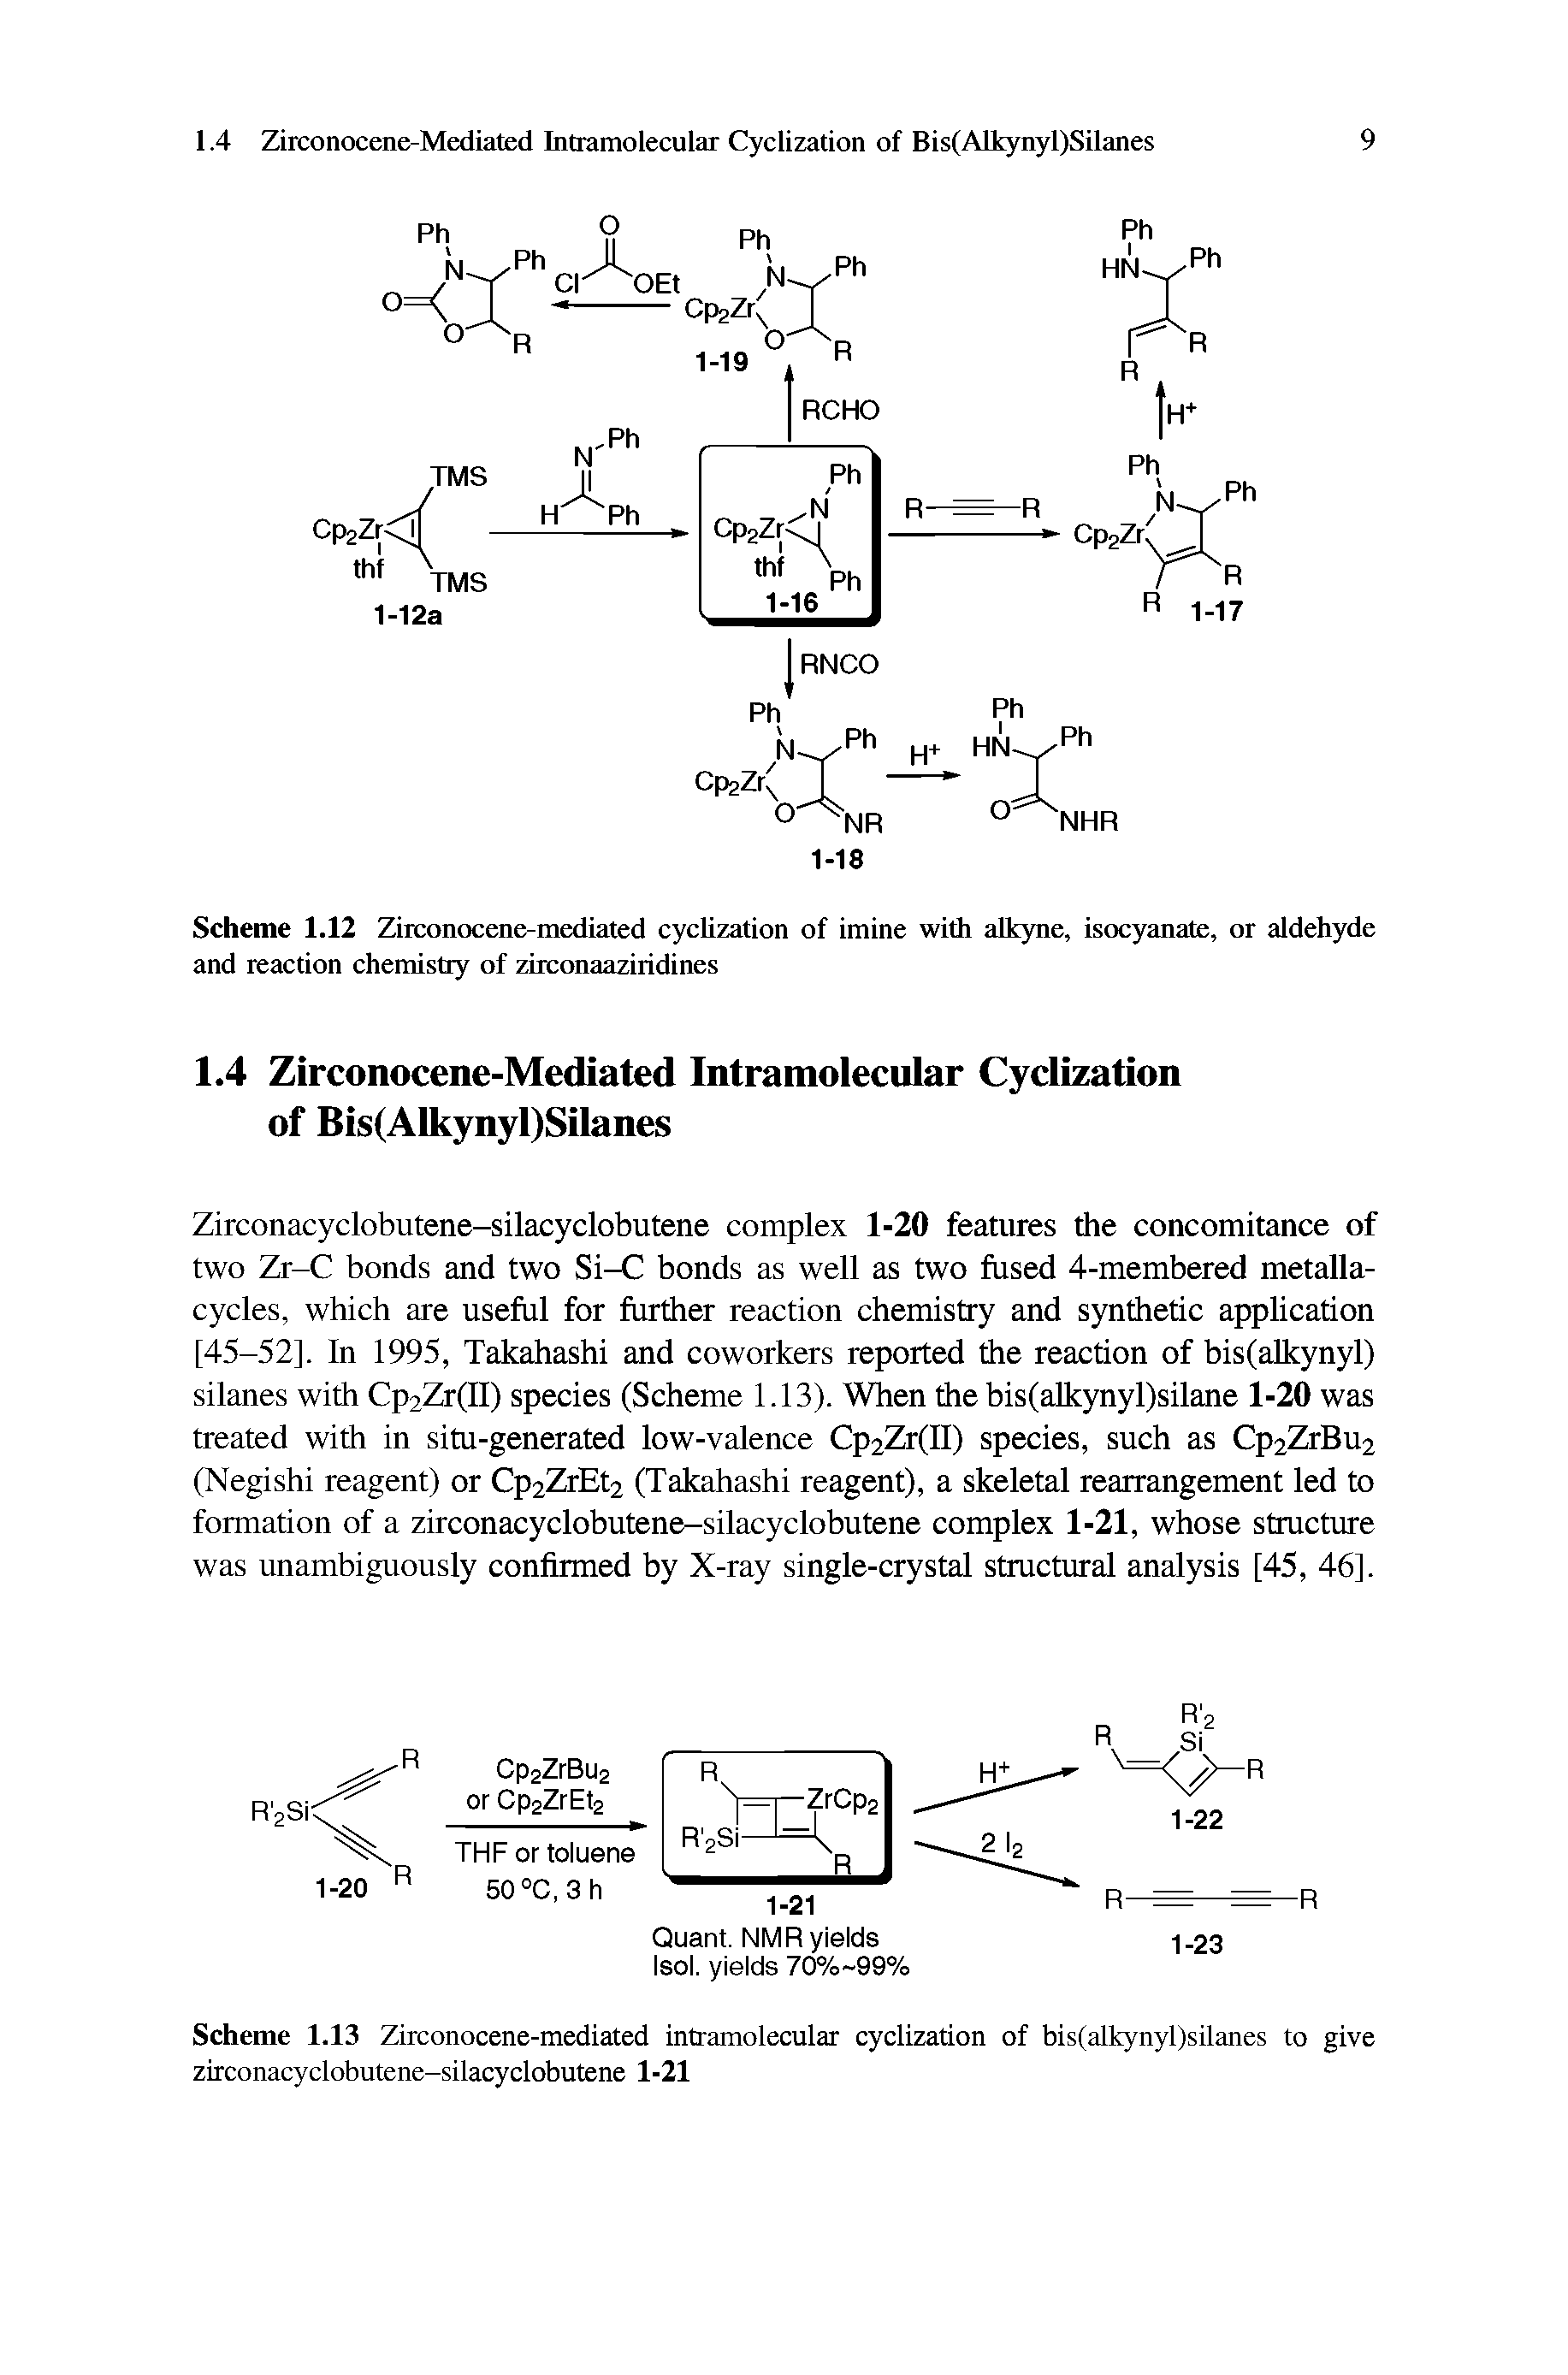 Scheme 1.13 Zirconocene-mediated intramolecular cyclization of bis(alkynyl)silanes to give zirconacyclobutene-silaeyelobutene 1-21...